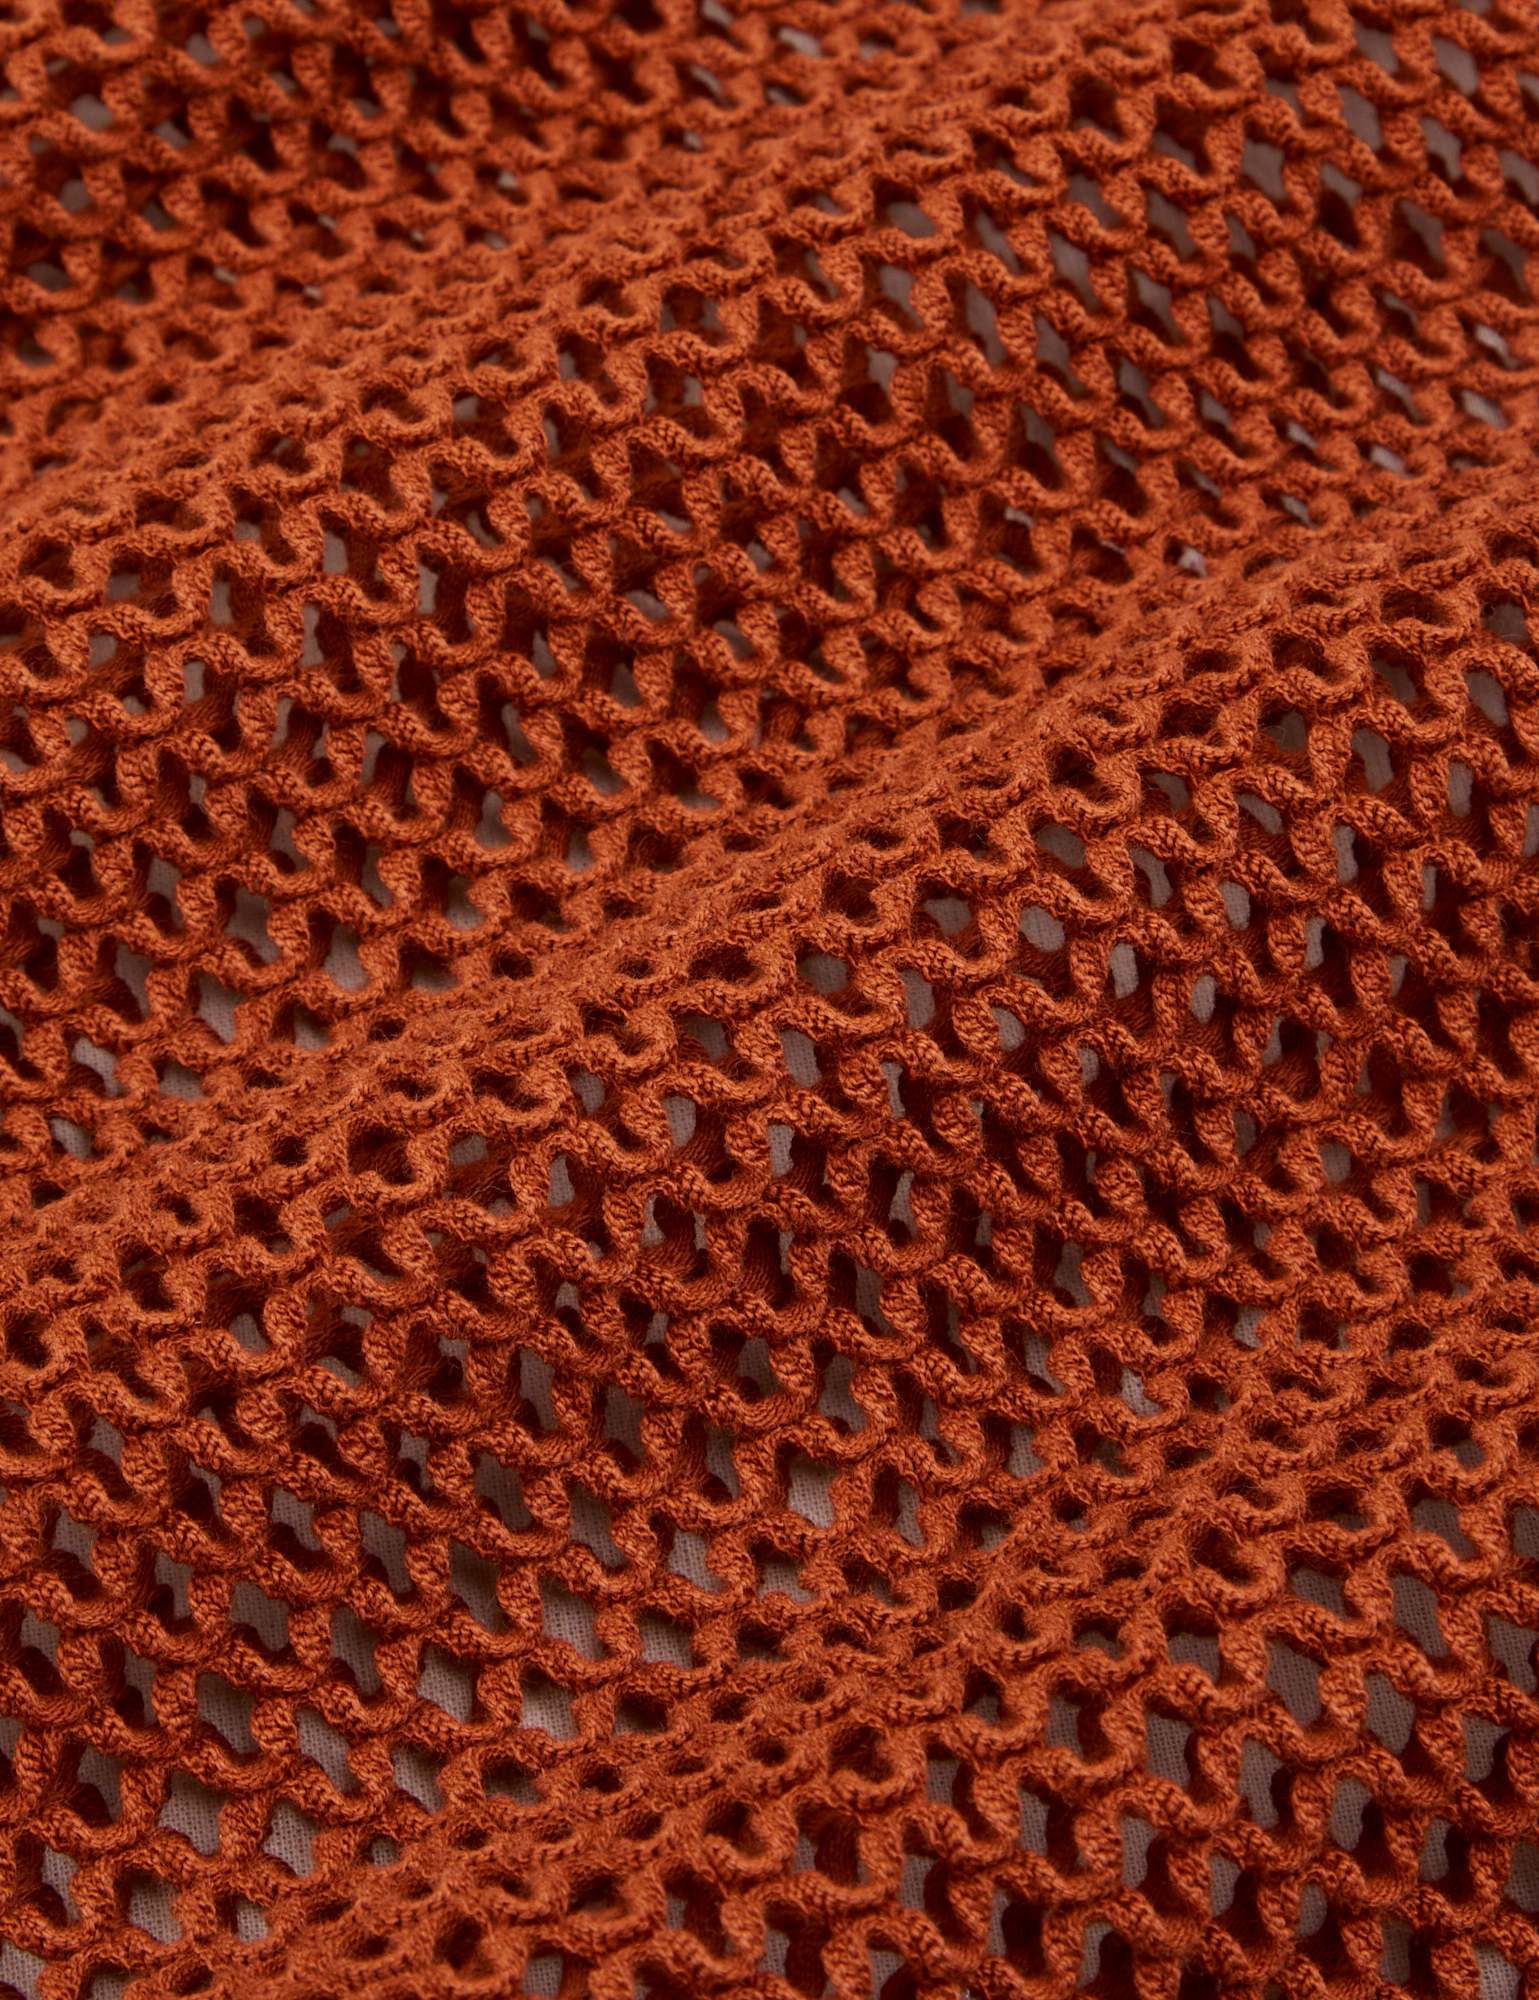 Mesh Tank Top in Burnt Terracotta fabric detail close up